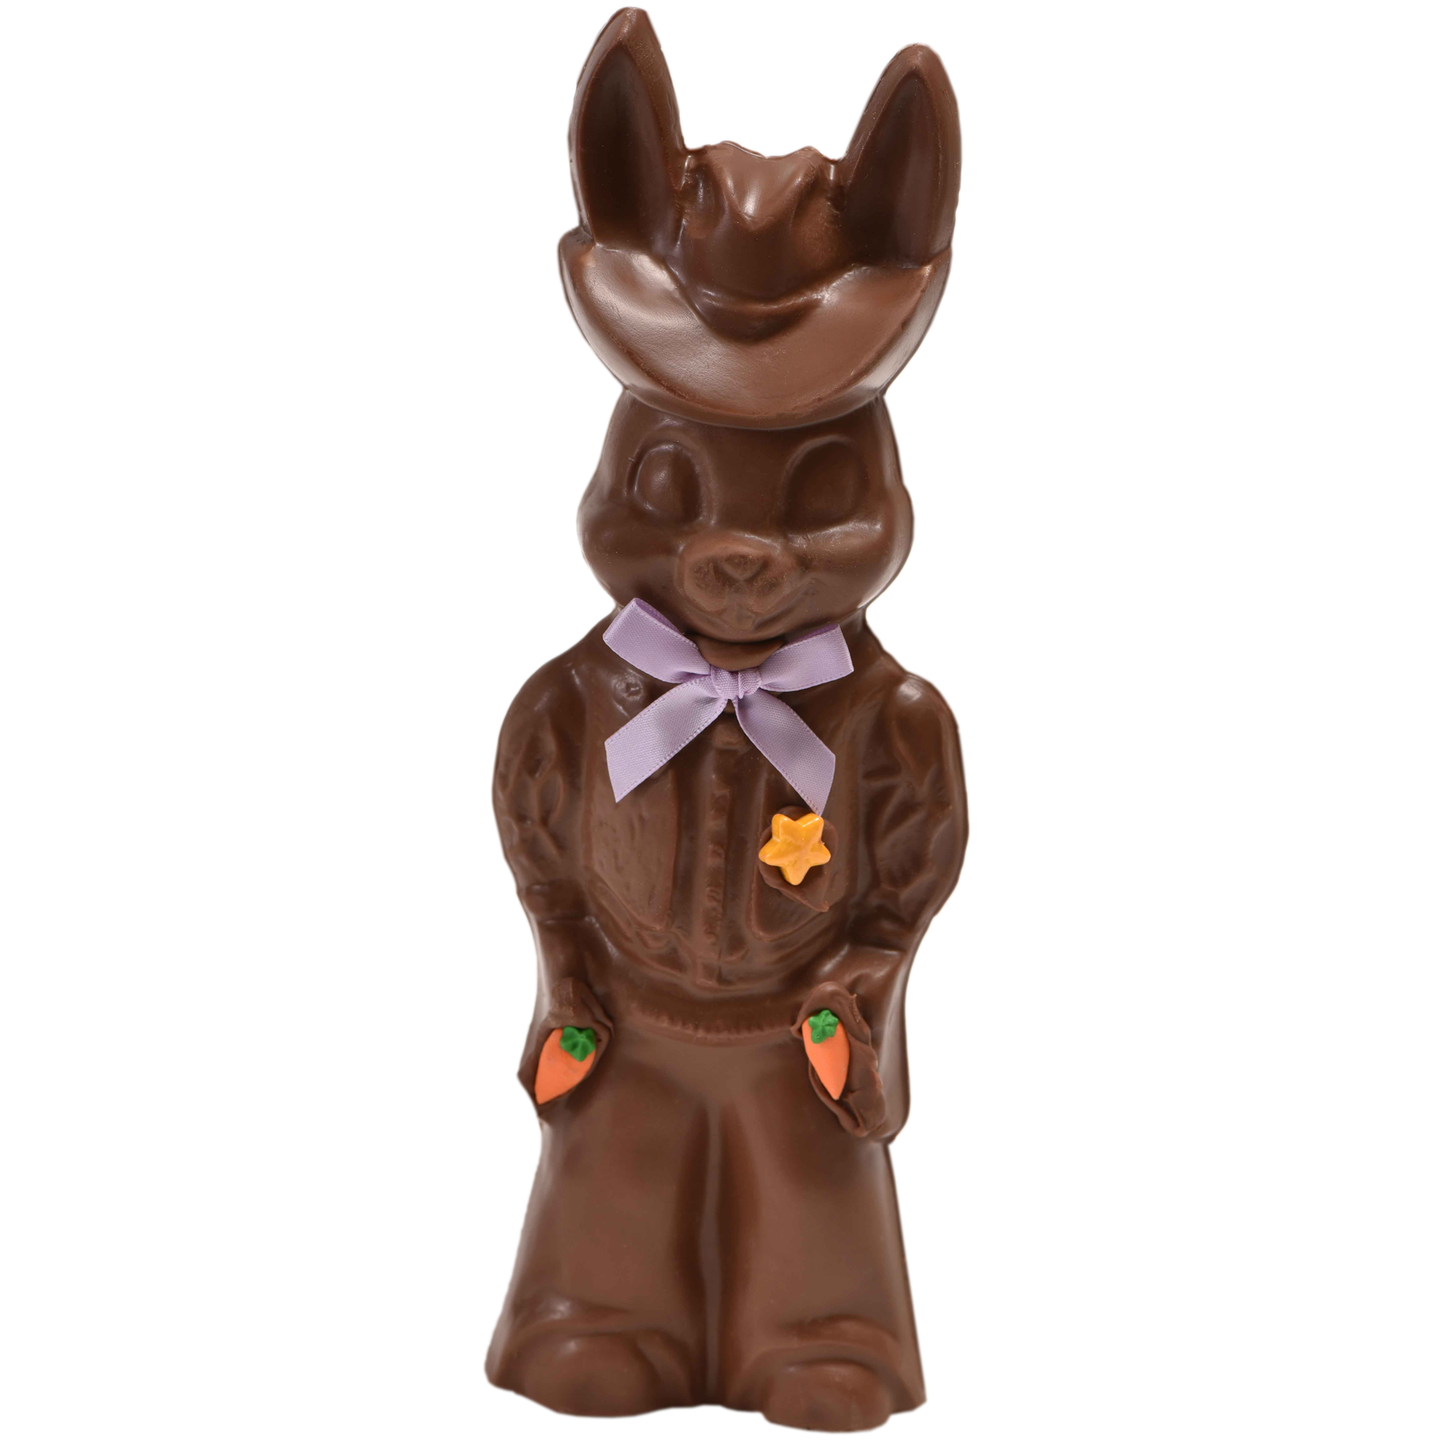 10" Milk Chocolate Easter Bunny # 20 - "Little Cowboy"